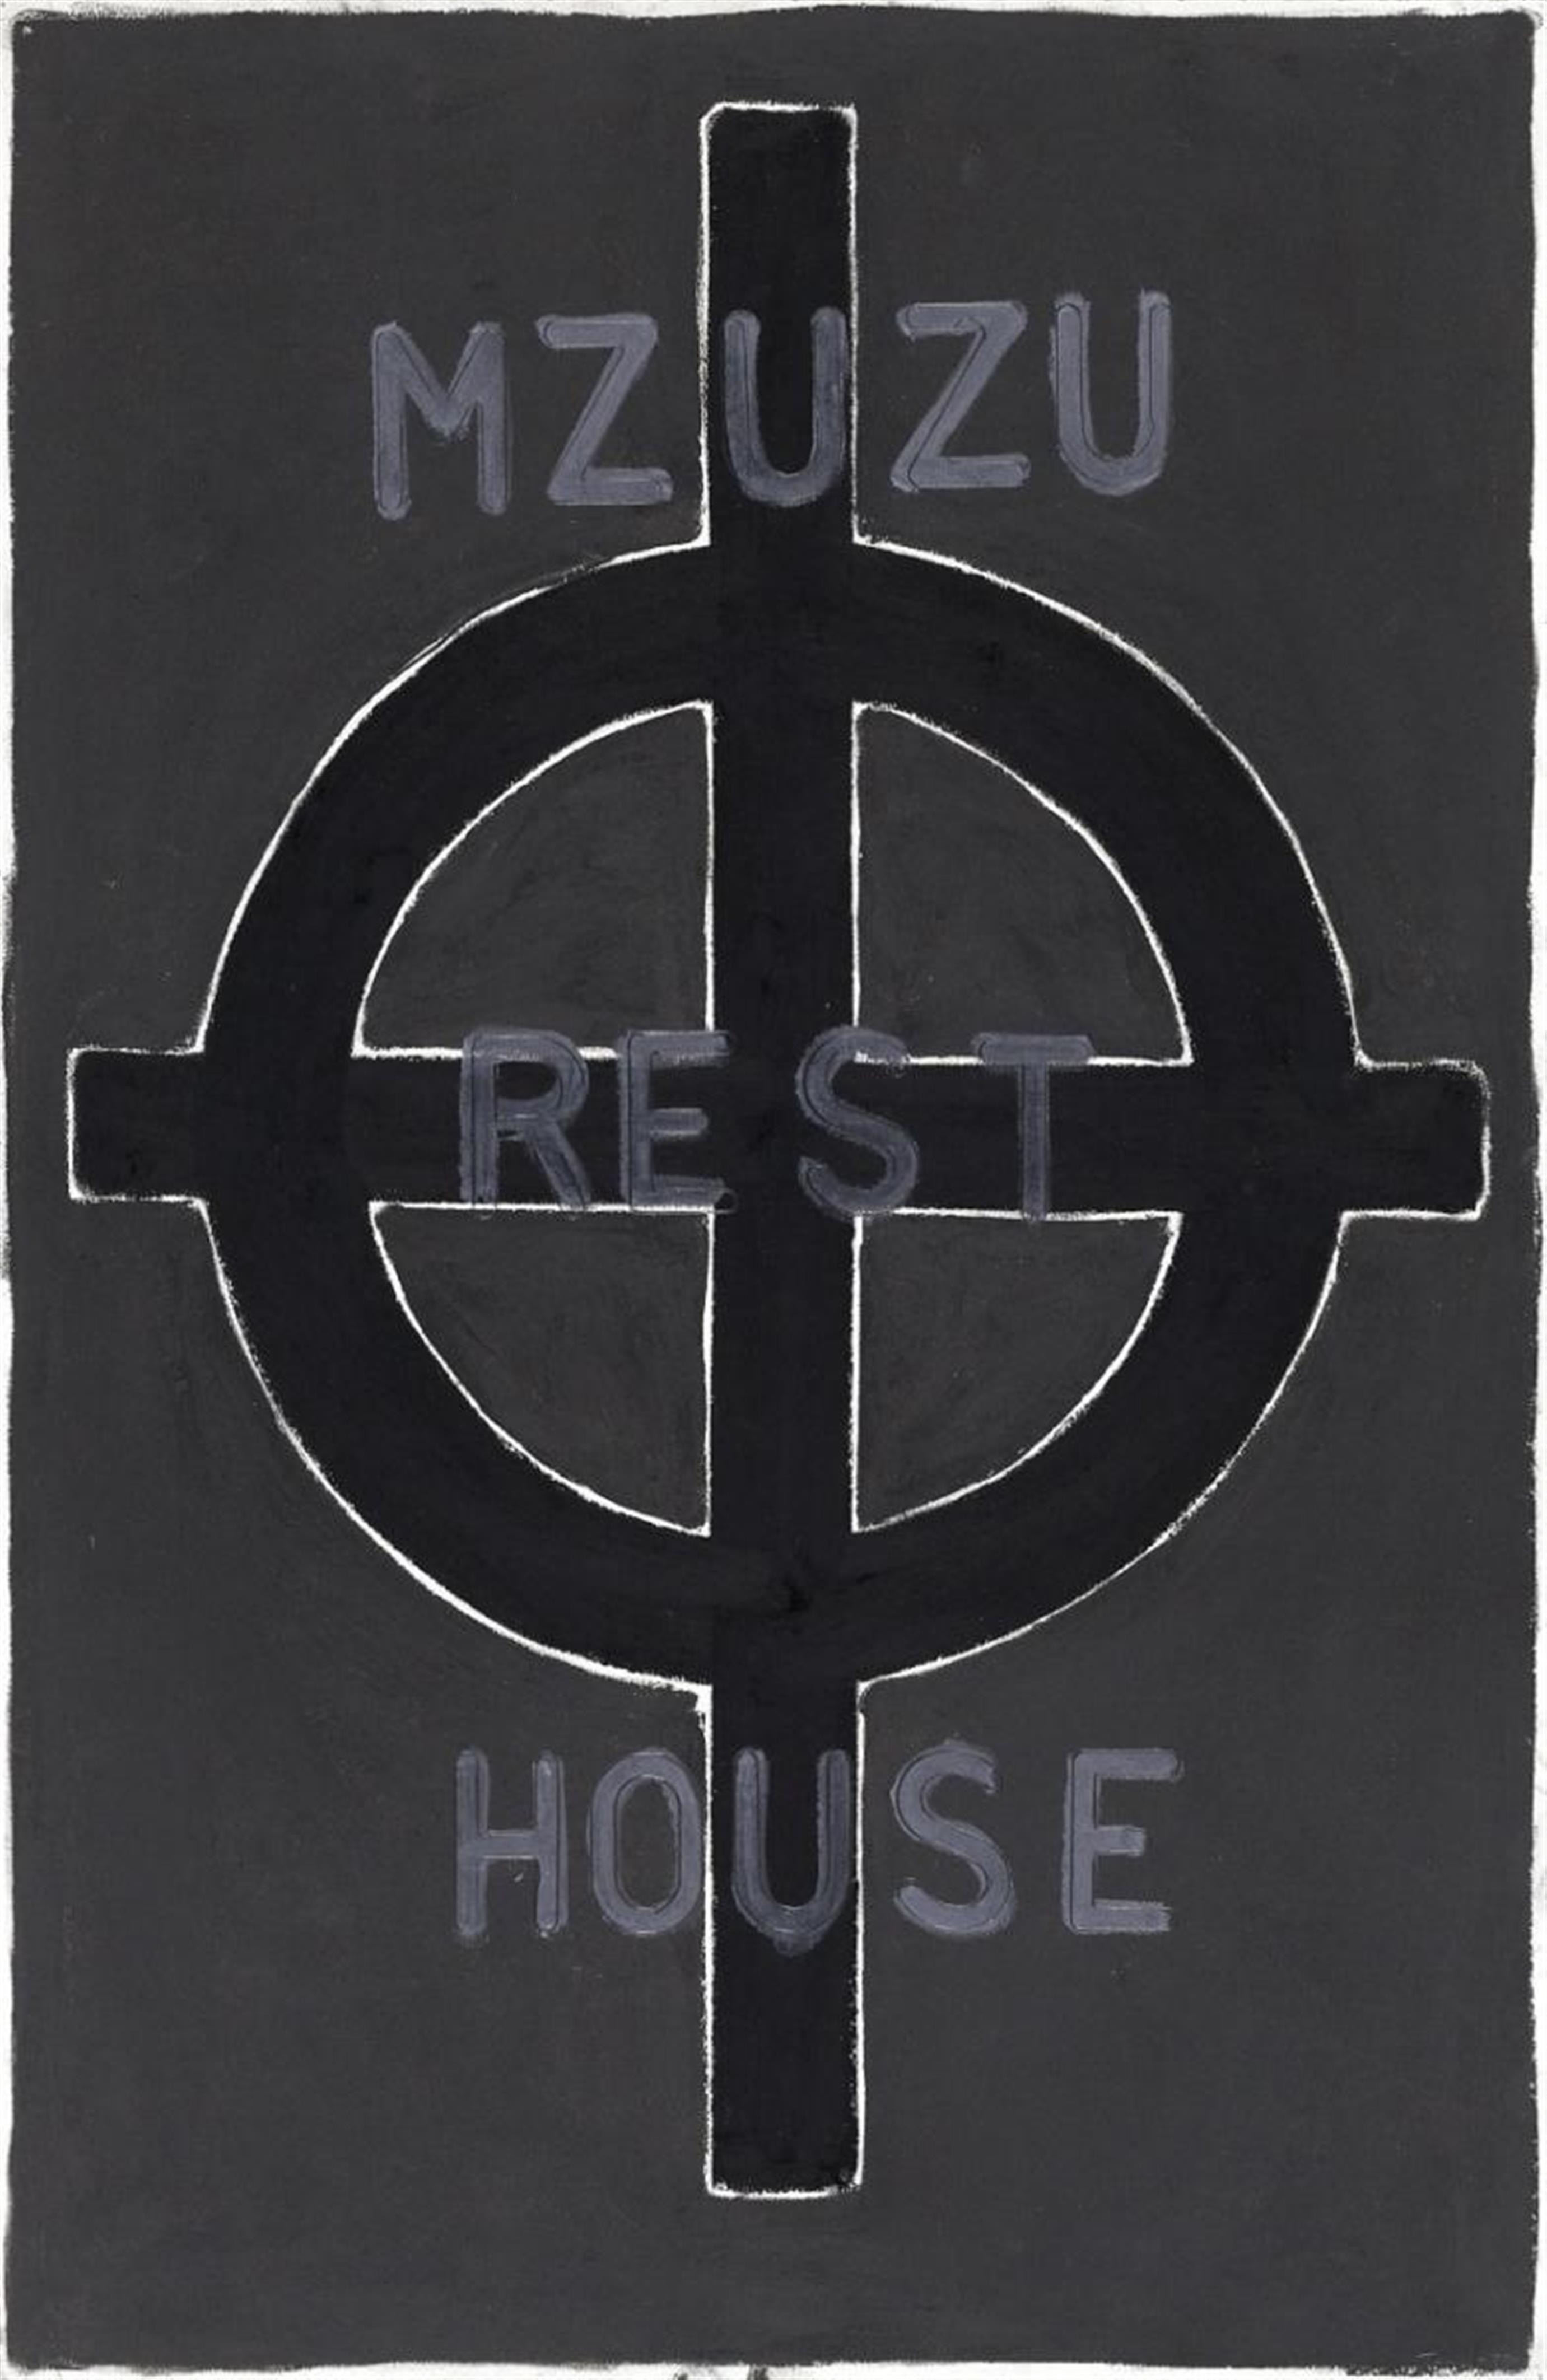 David Tremlett - Mzuzu Rest House - image-1